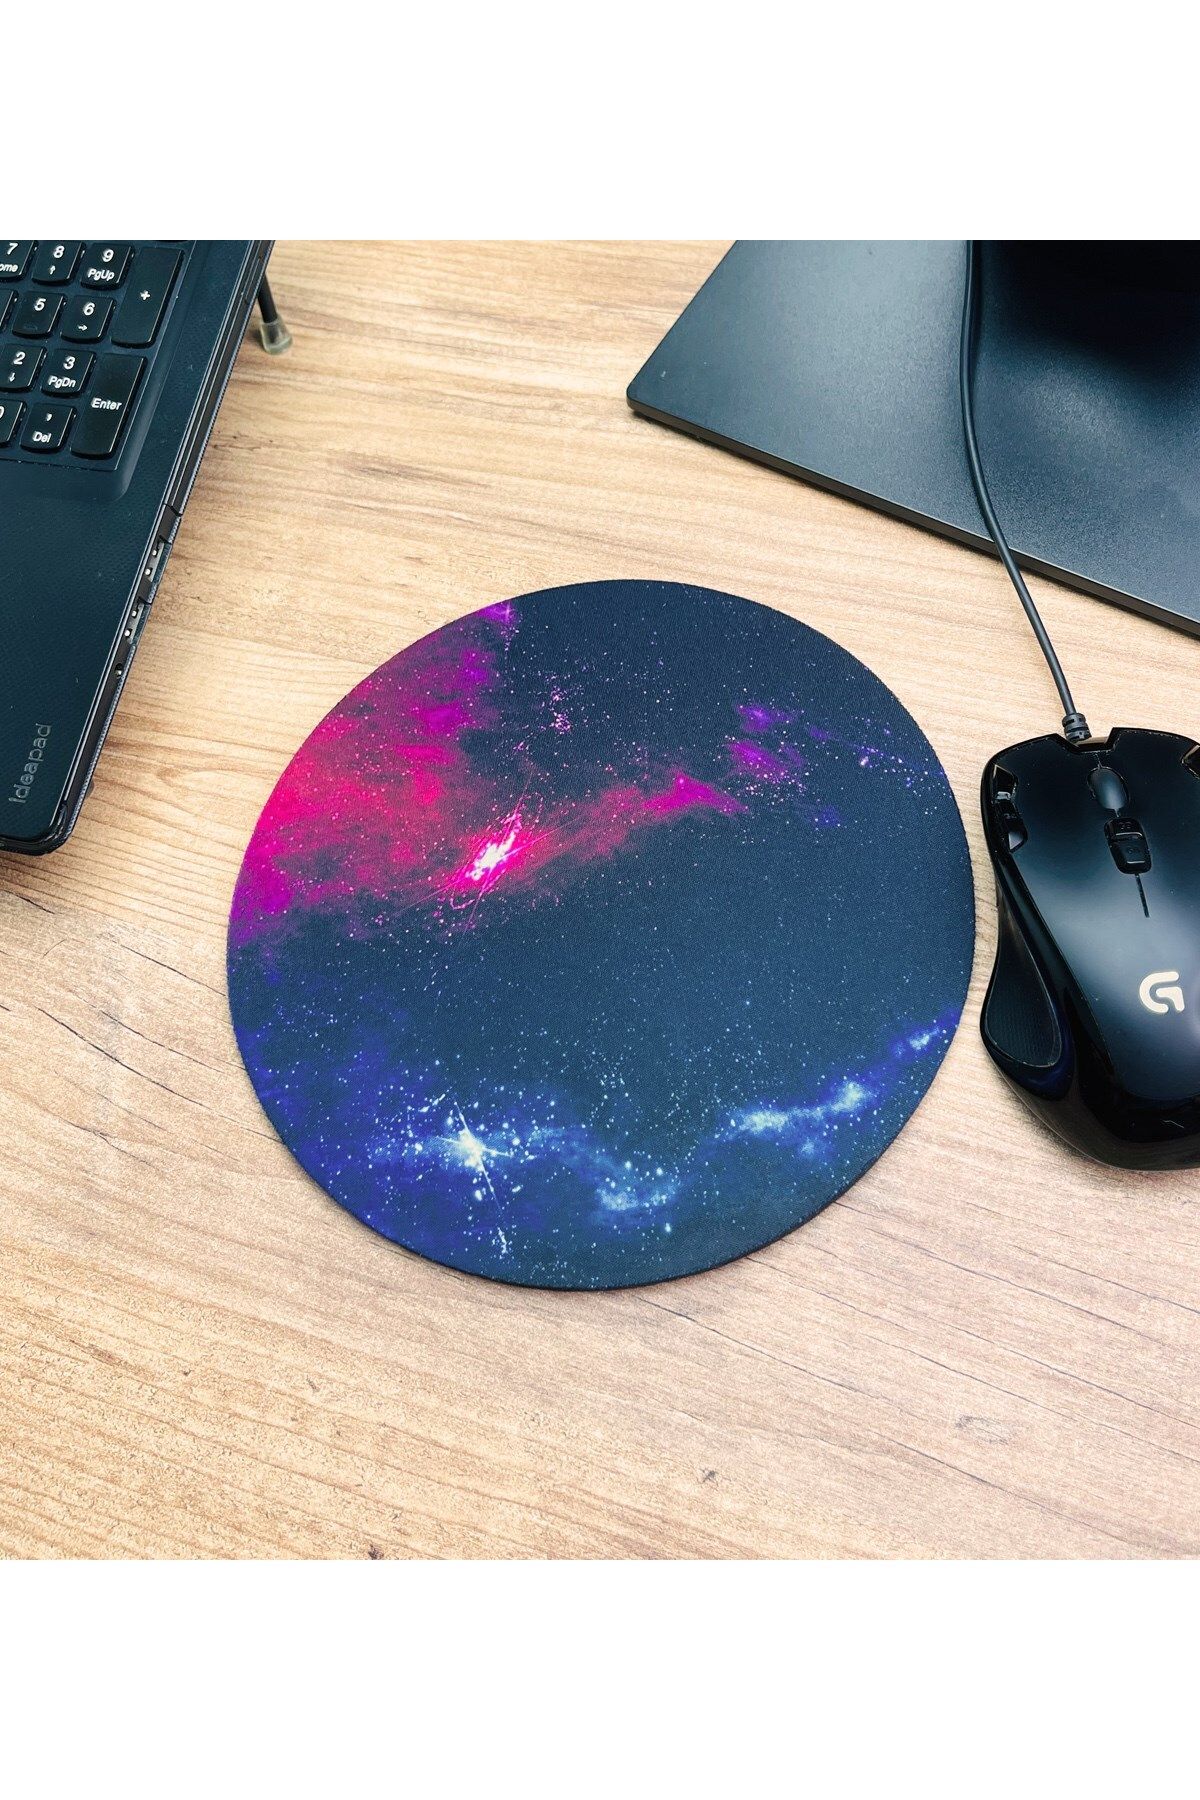 Gift Moda Space Tasarımlı Oval Mouse Pad